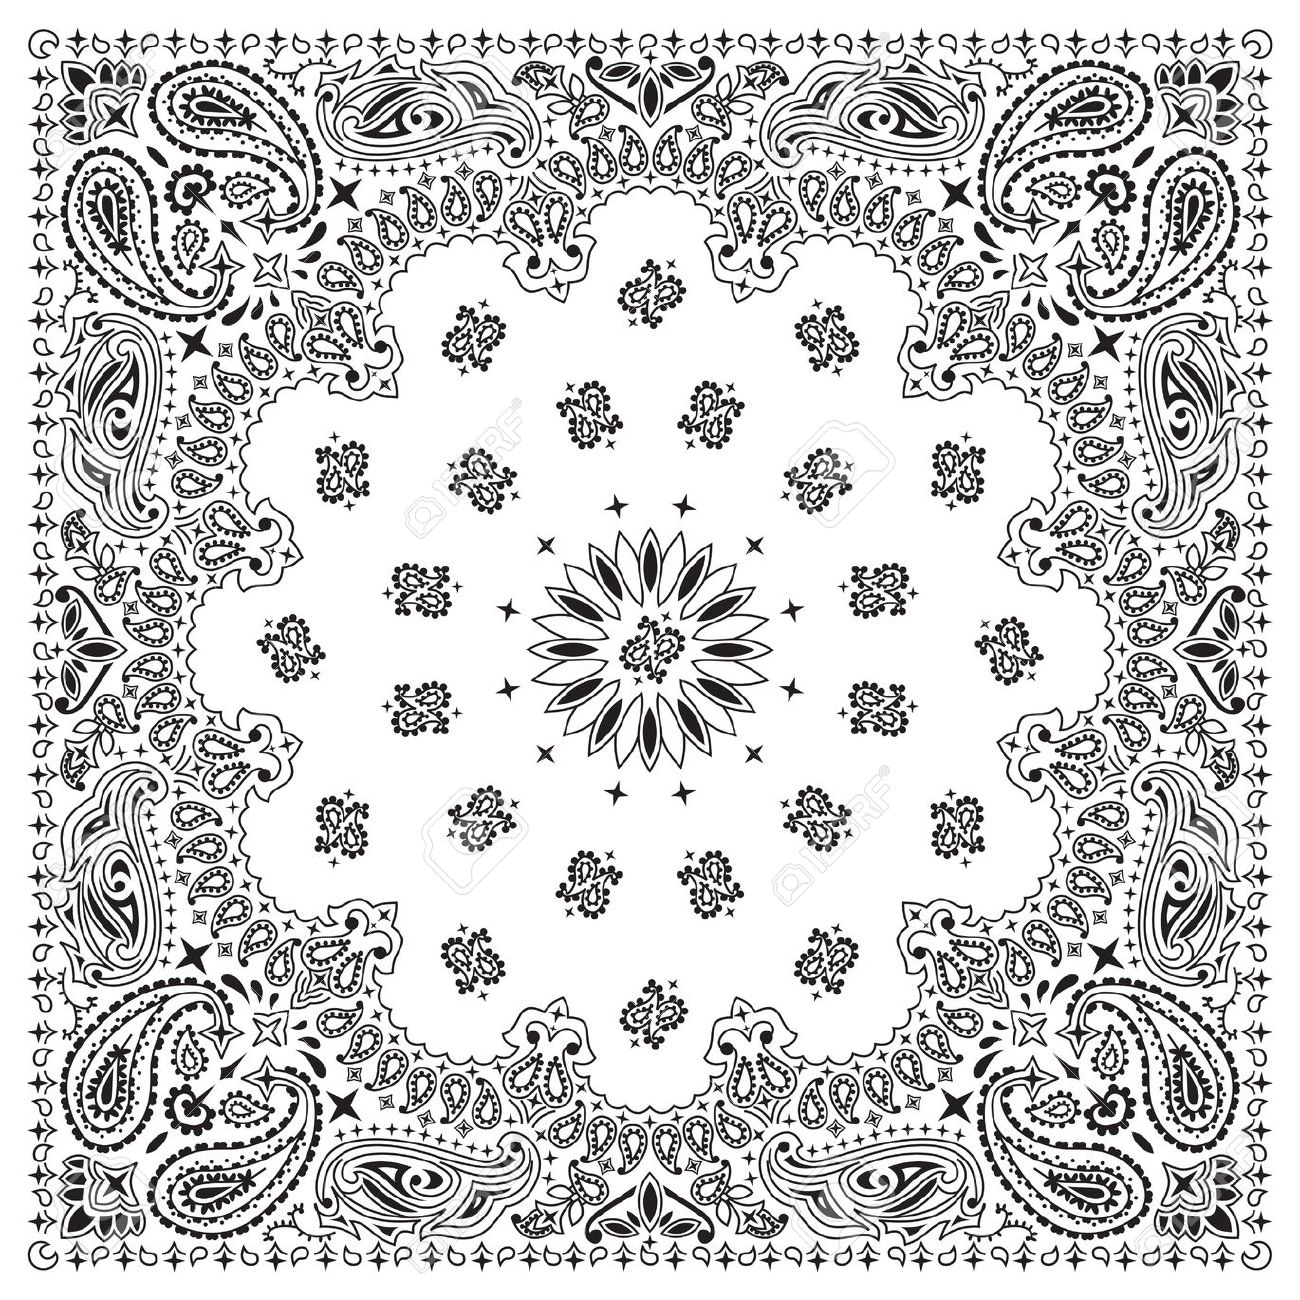 bandana-pattern-drawing-at-getdrawings-free-download